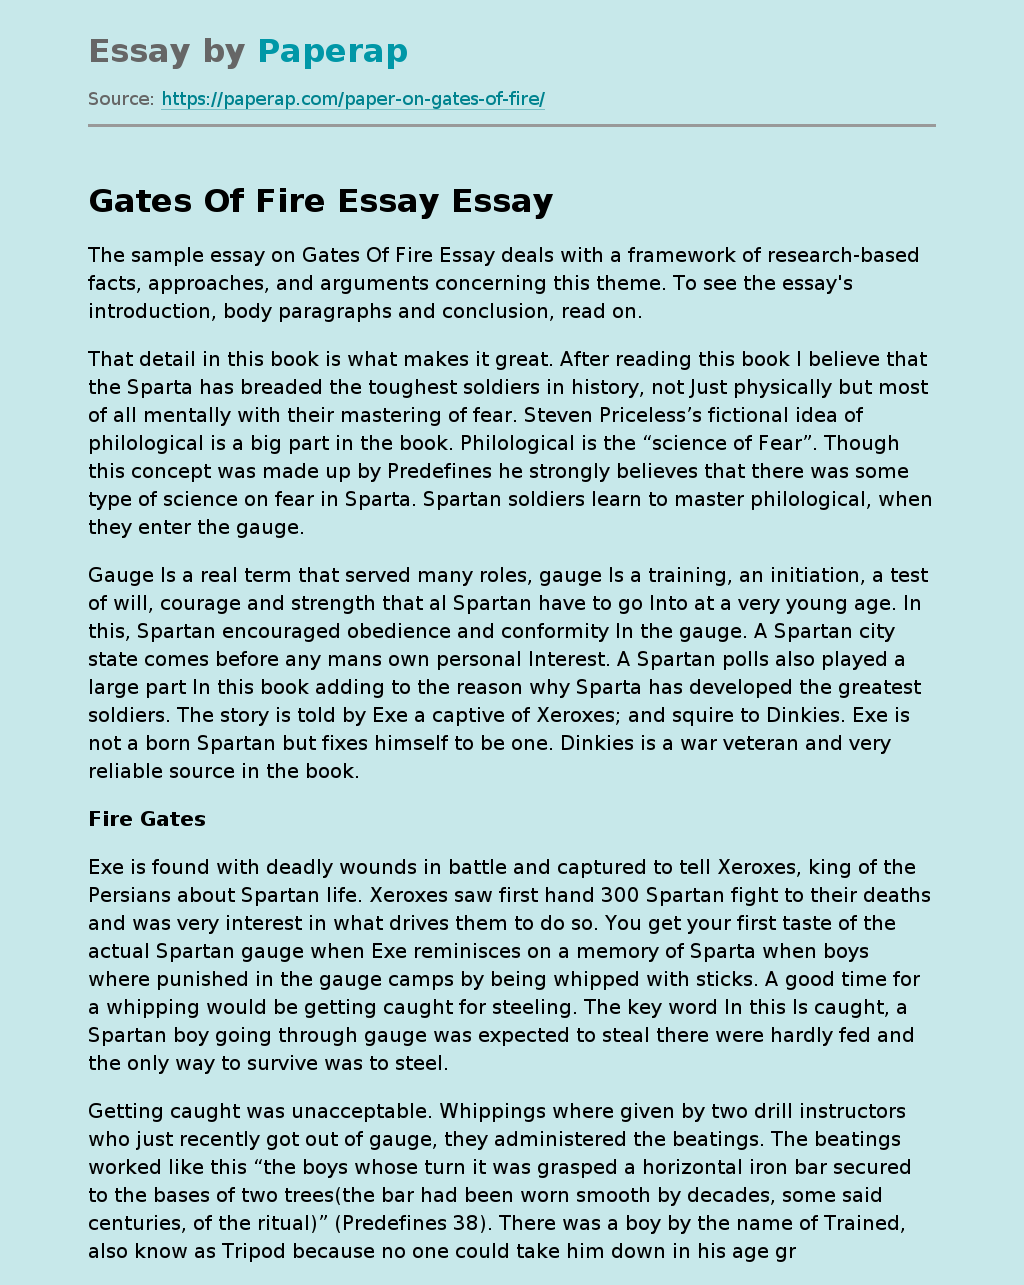 Sample Essay on Gates of Fire Essay